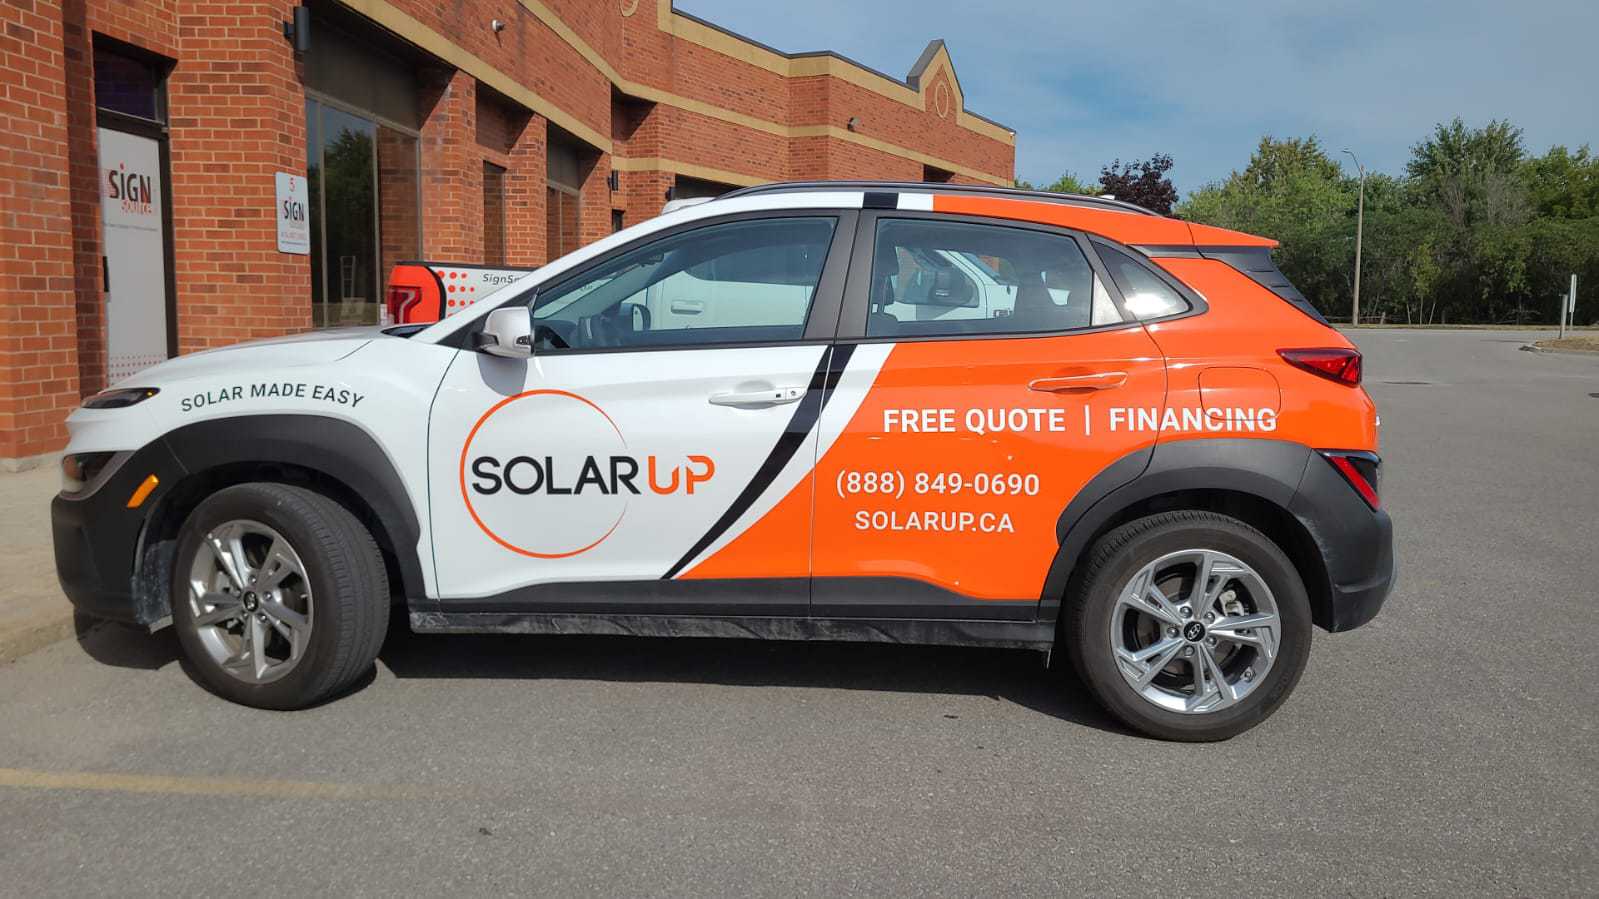 Advertising Vinyl Car Wraps for Solar Up in Toronto, ON